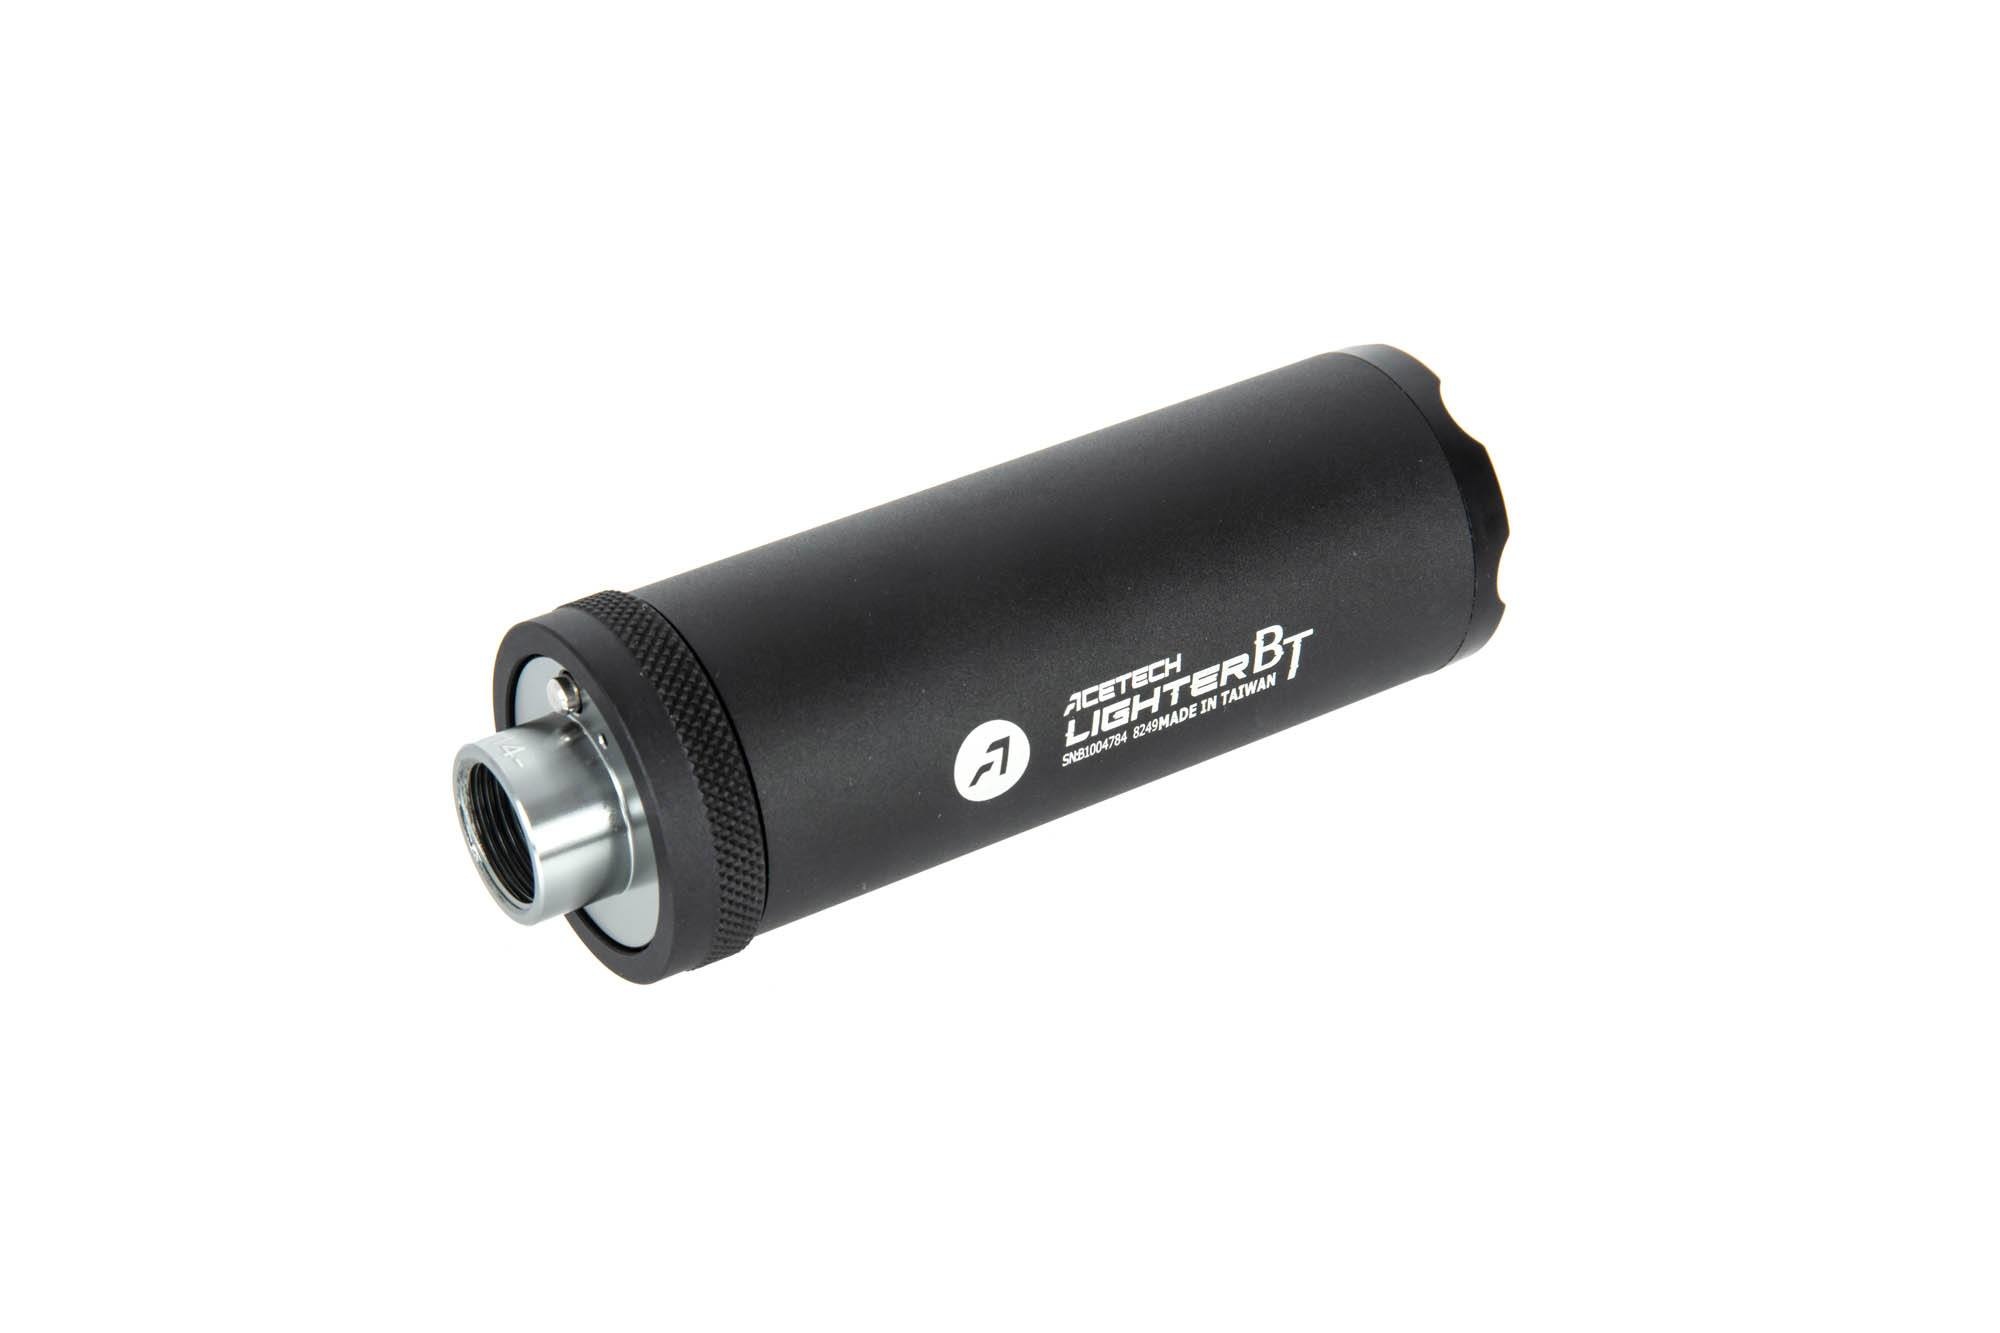 AceTech Lighter BT Tracer Leuchtspur Silencer - BK/TAN